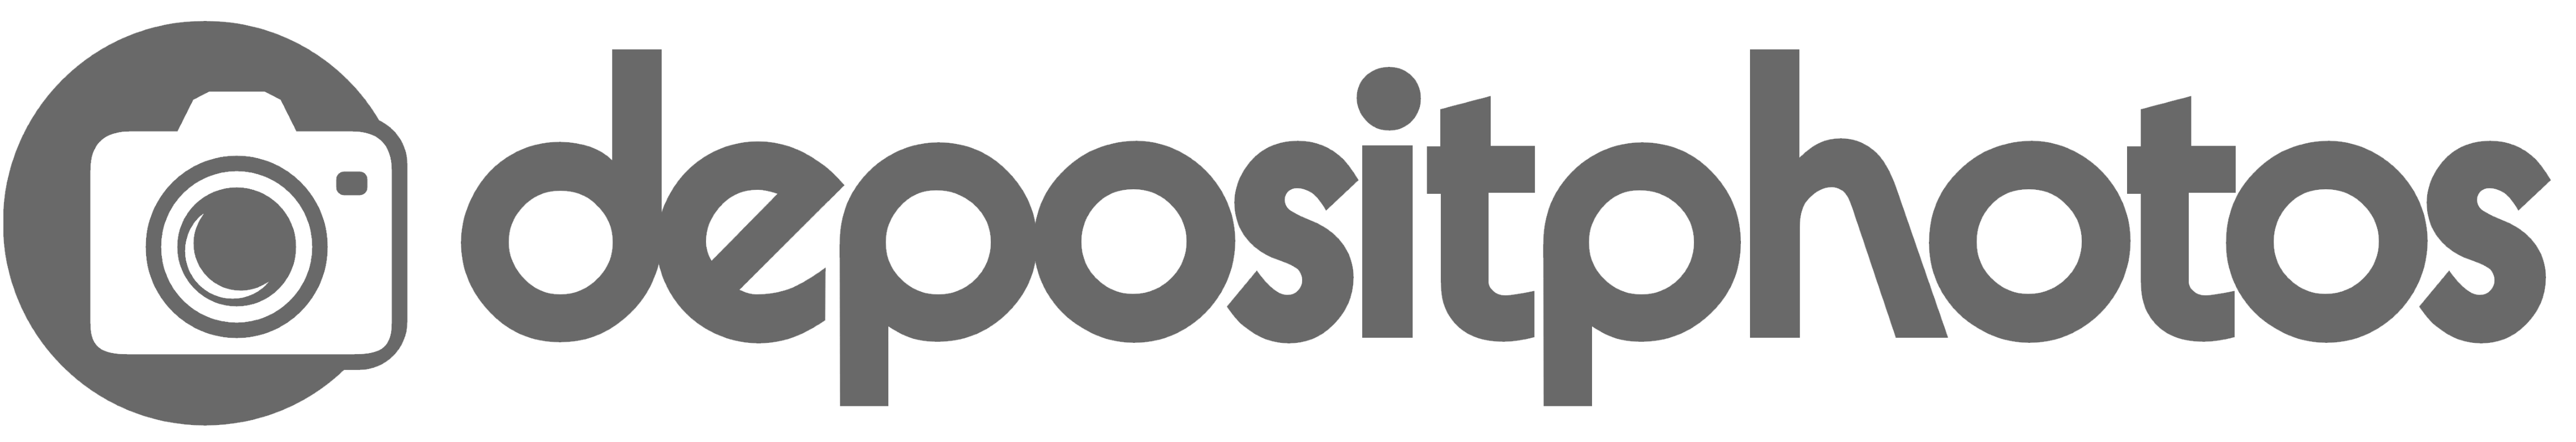 Depositphotos logo, logotype